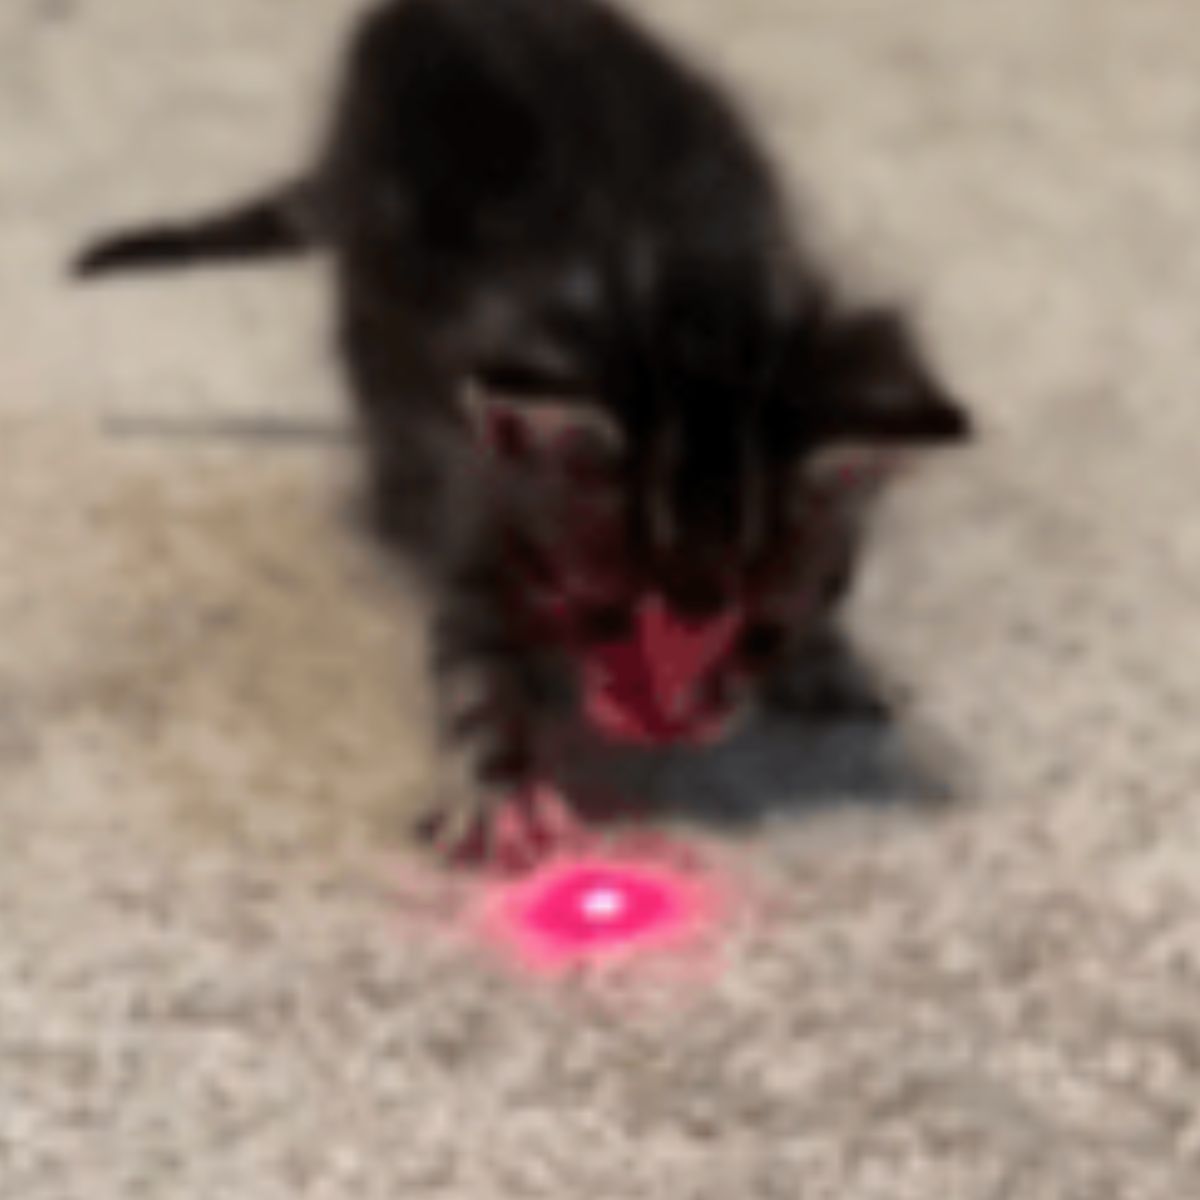 kitten looking at pink spot